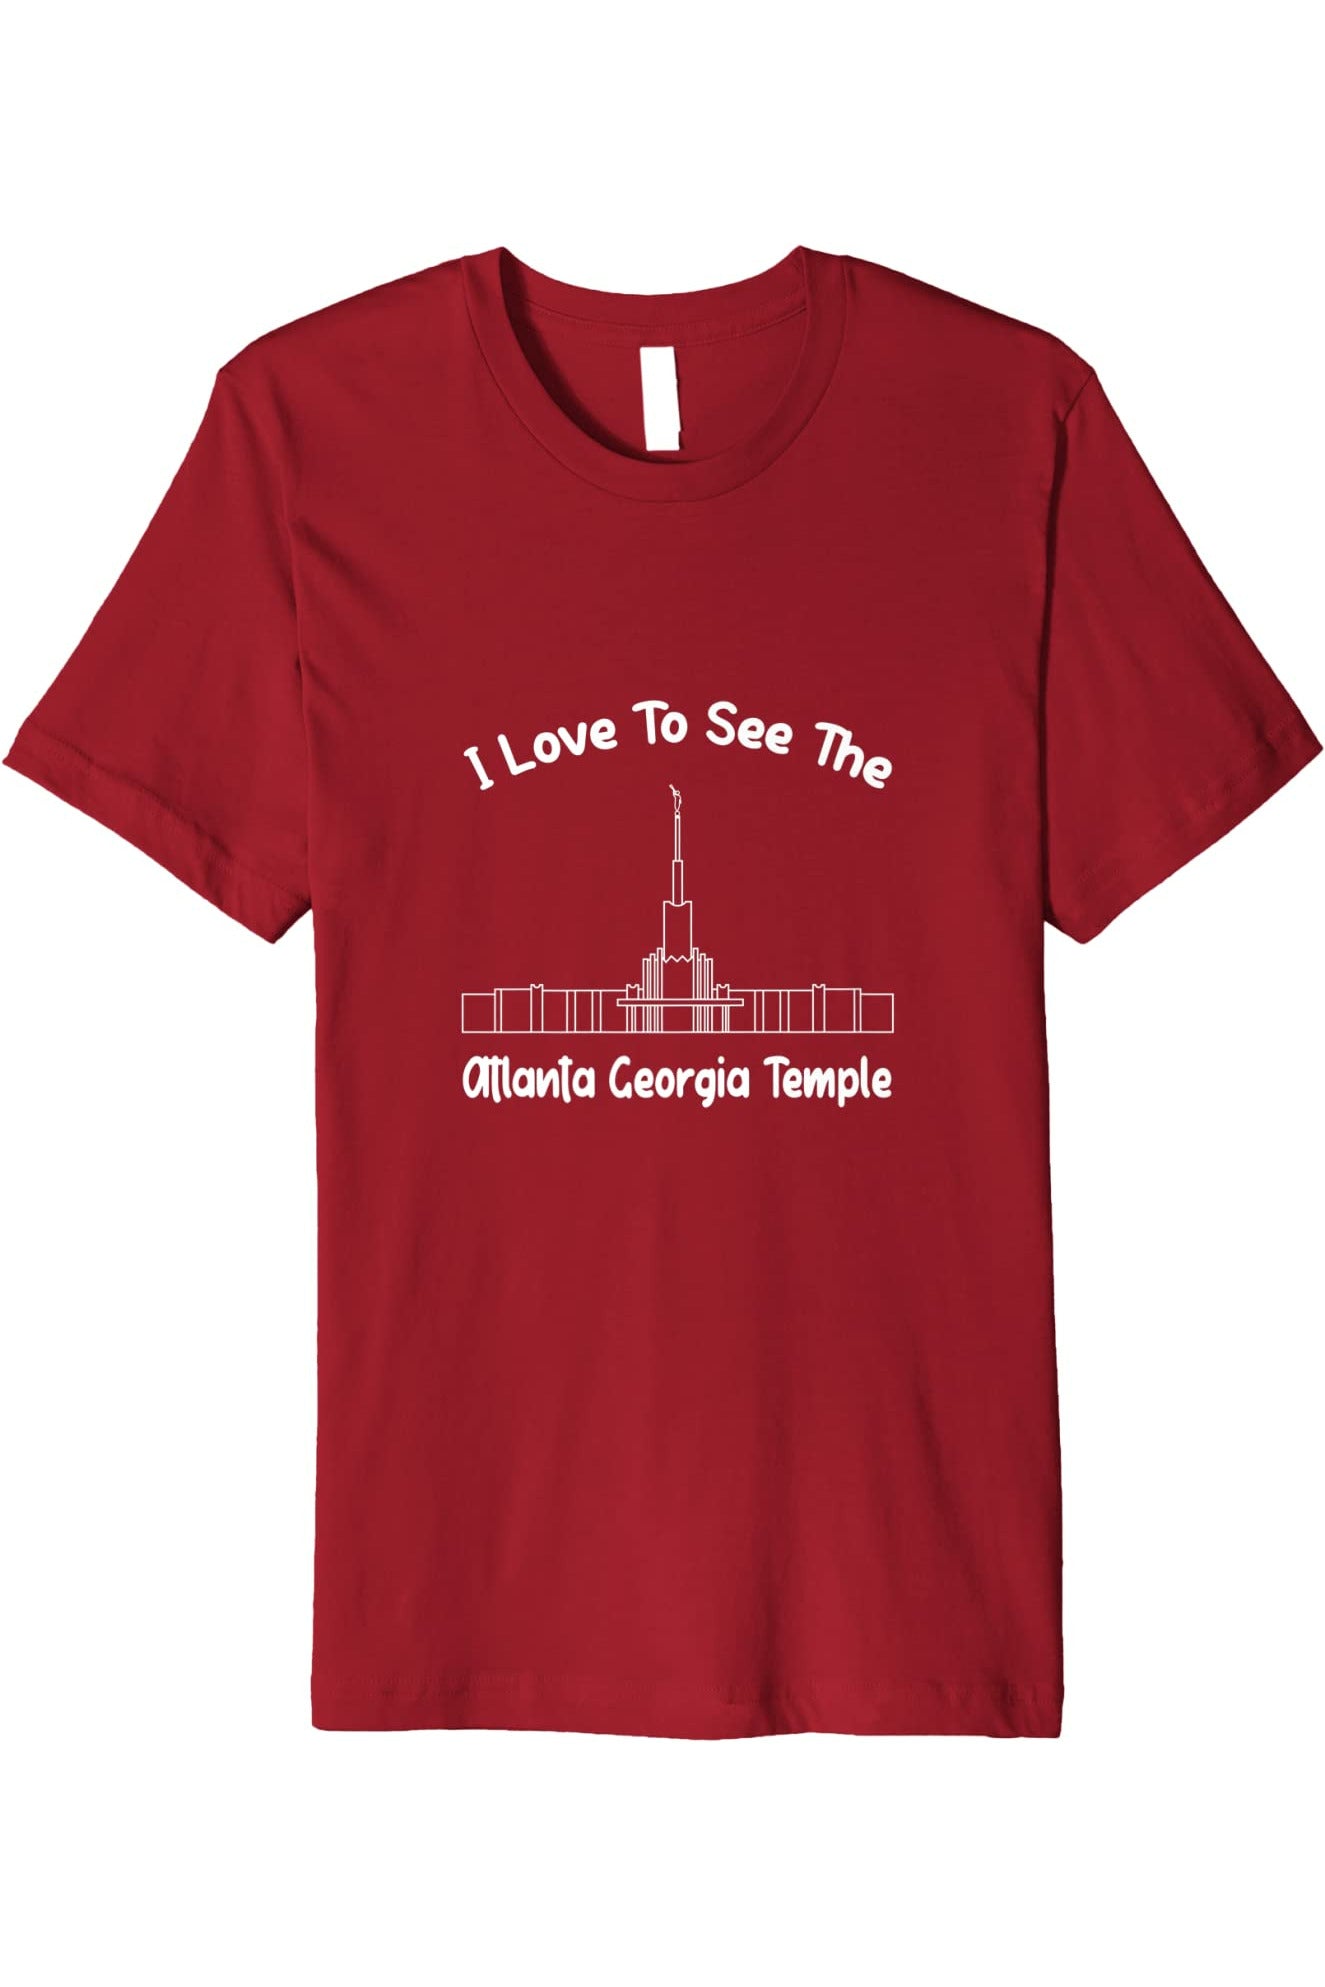 Atlanta Georgia Temple T-Shirt - Premium - Primary Style (English) US